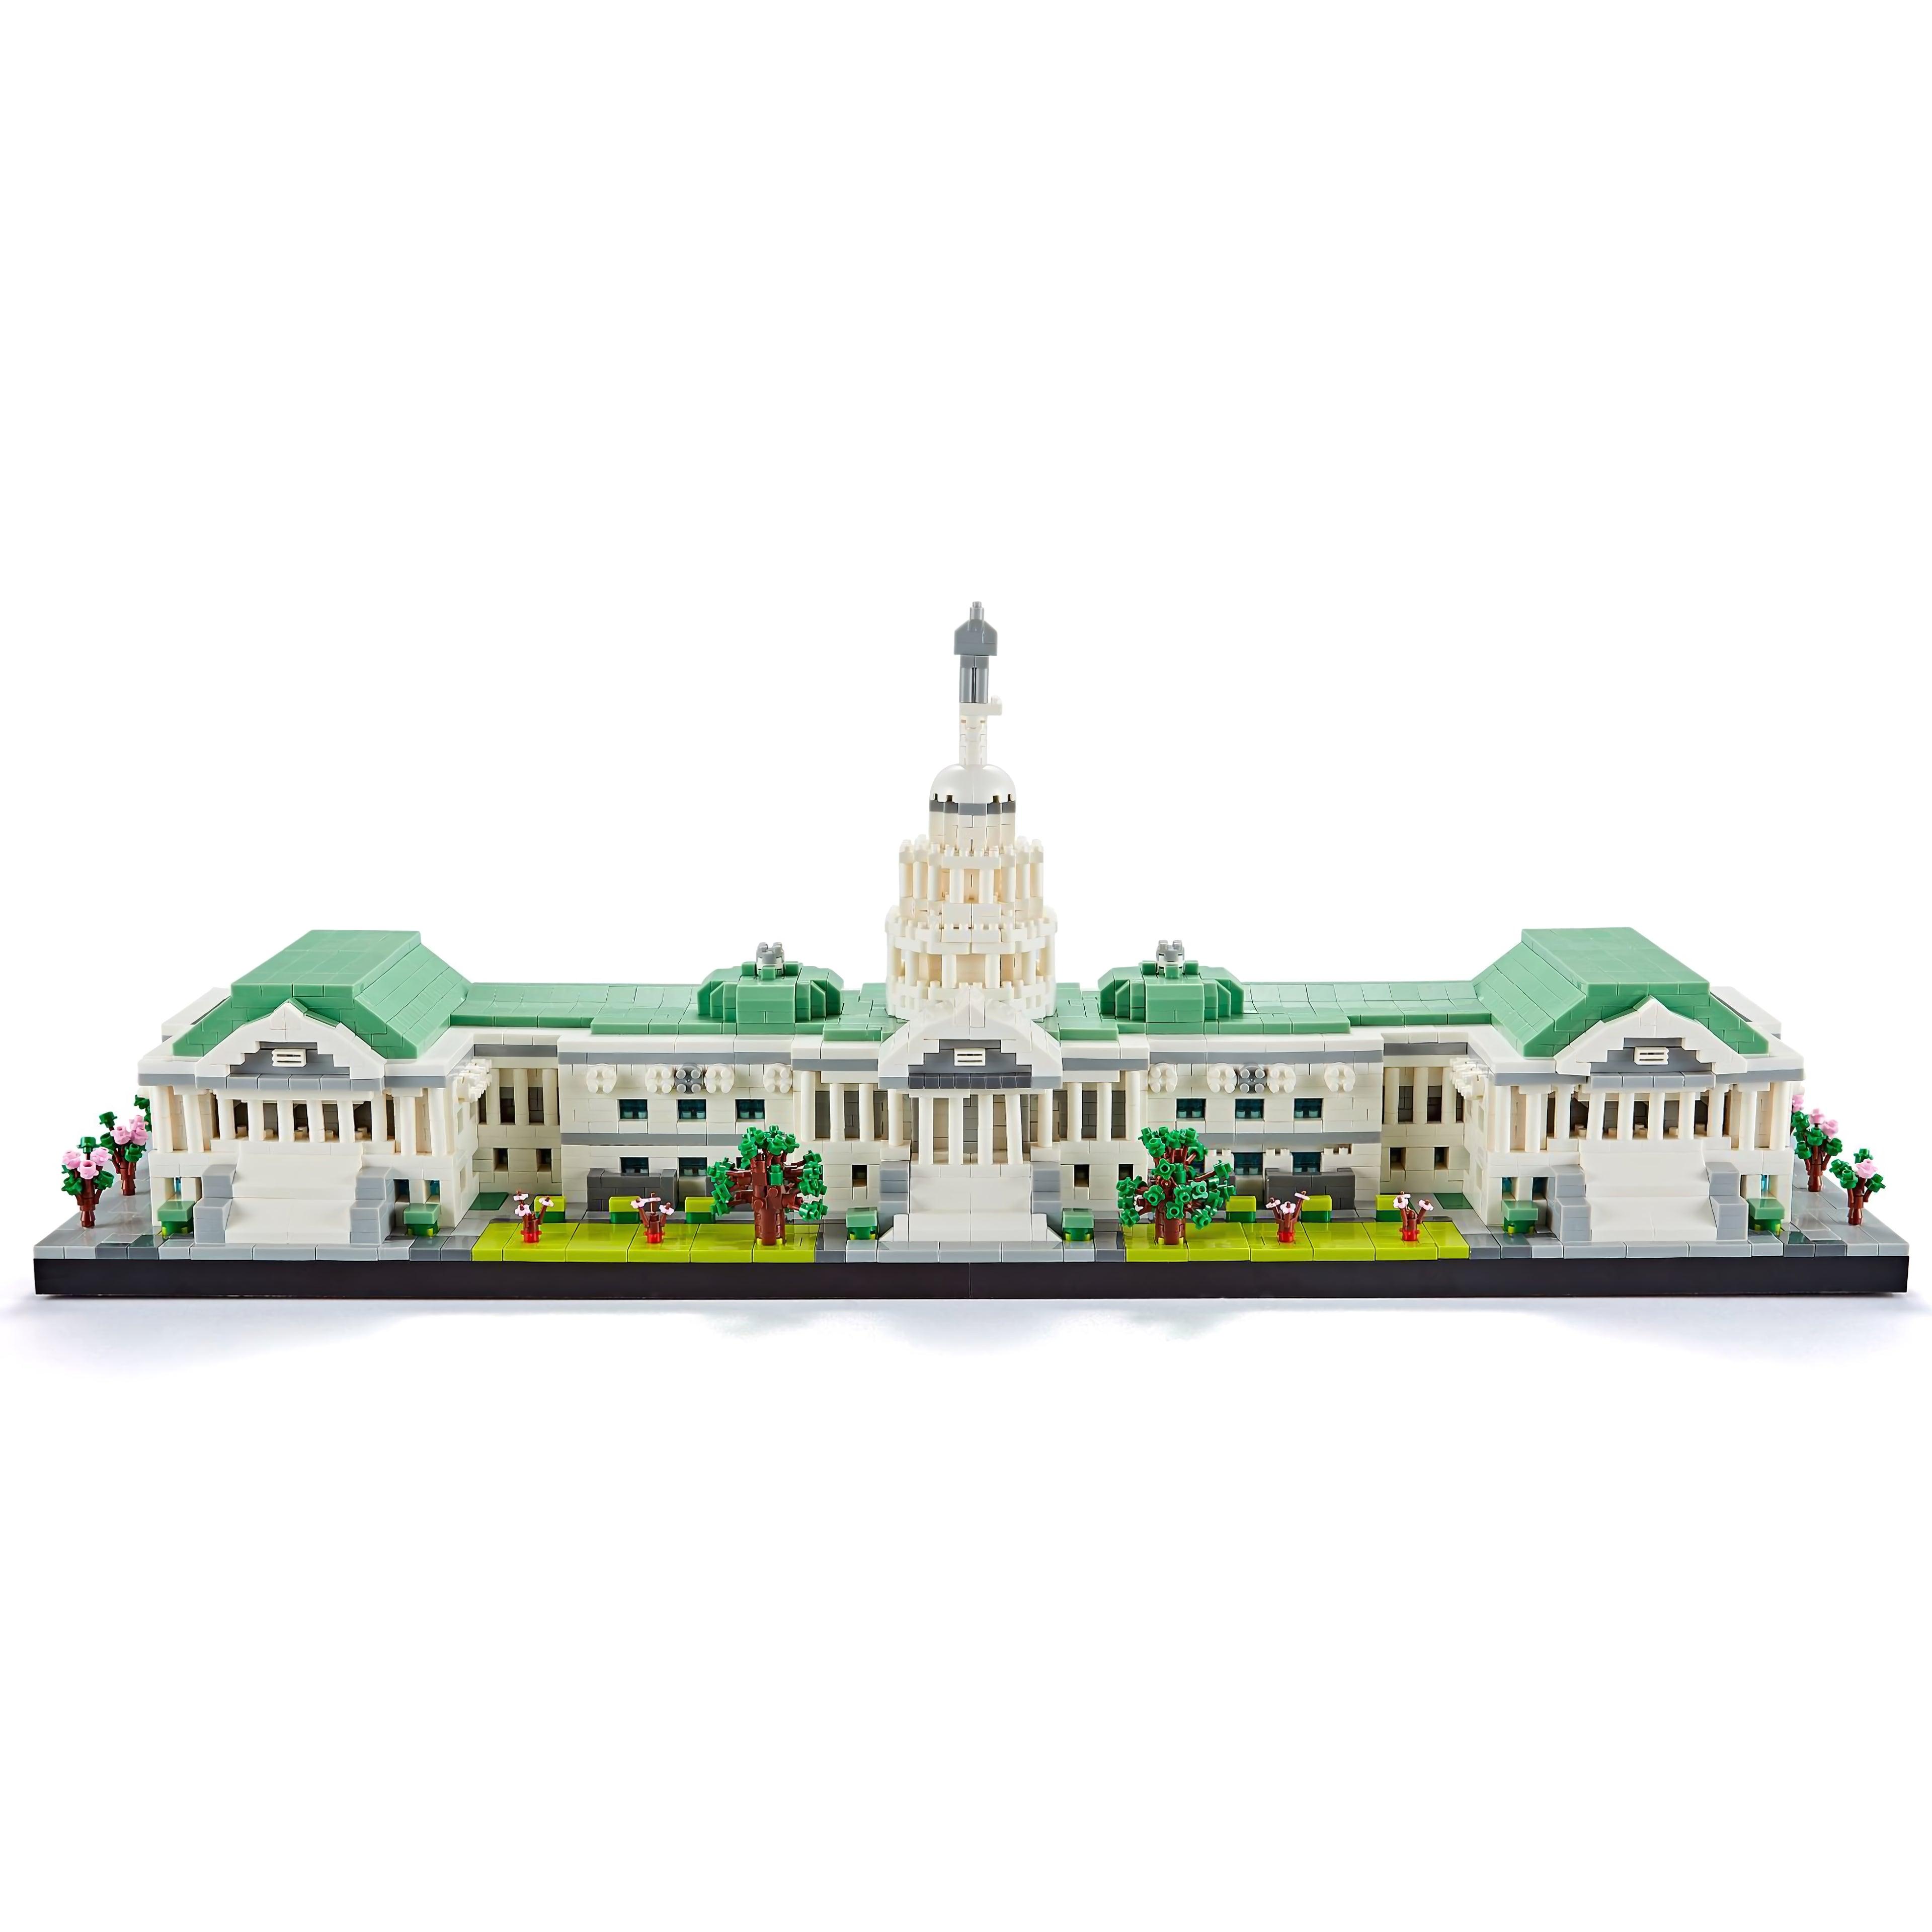 3630 Pcs The Capitol Collector's Edition Building Blocks Set - PANSEKtoy